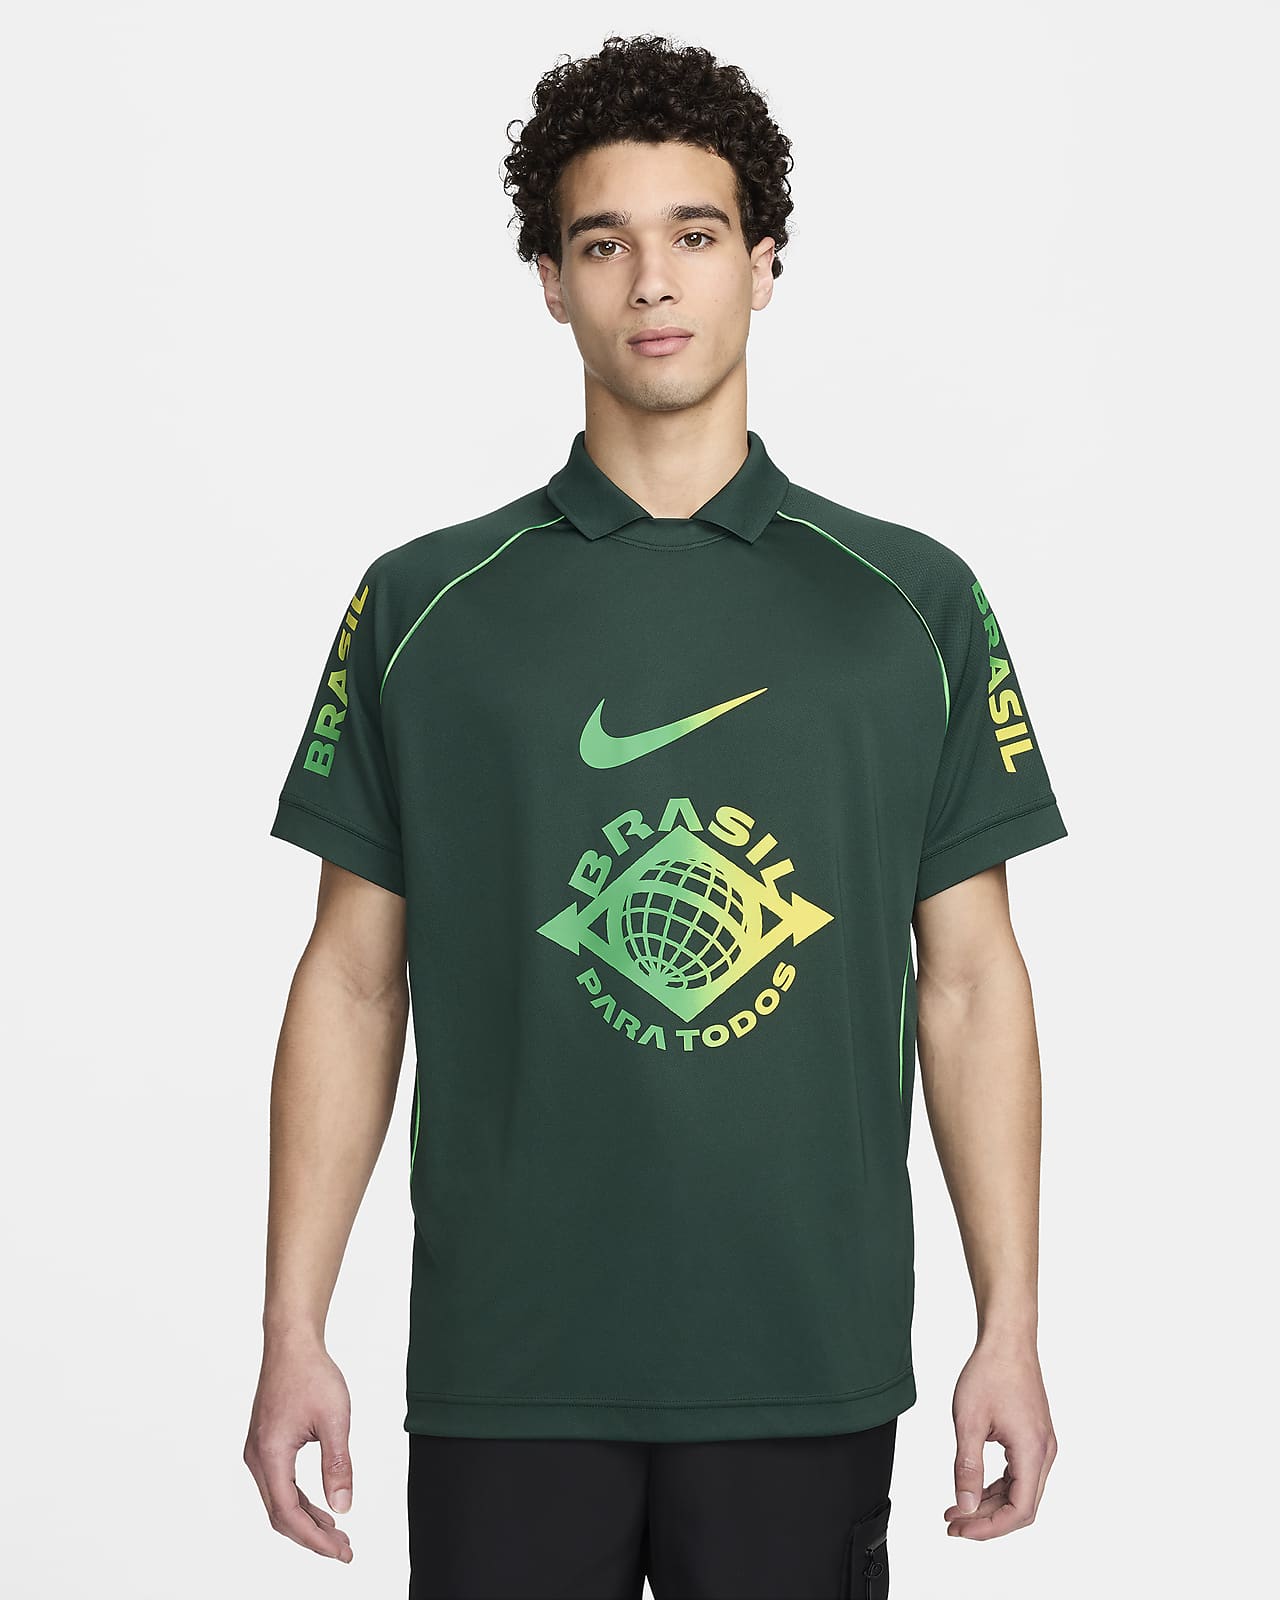 Brazil Men's Nike Dri-FIT Football Shirt